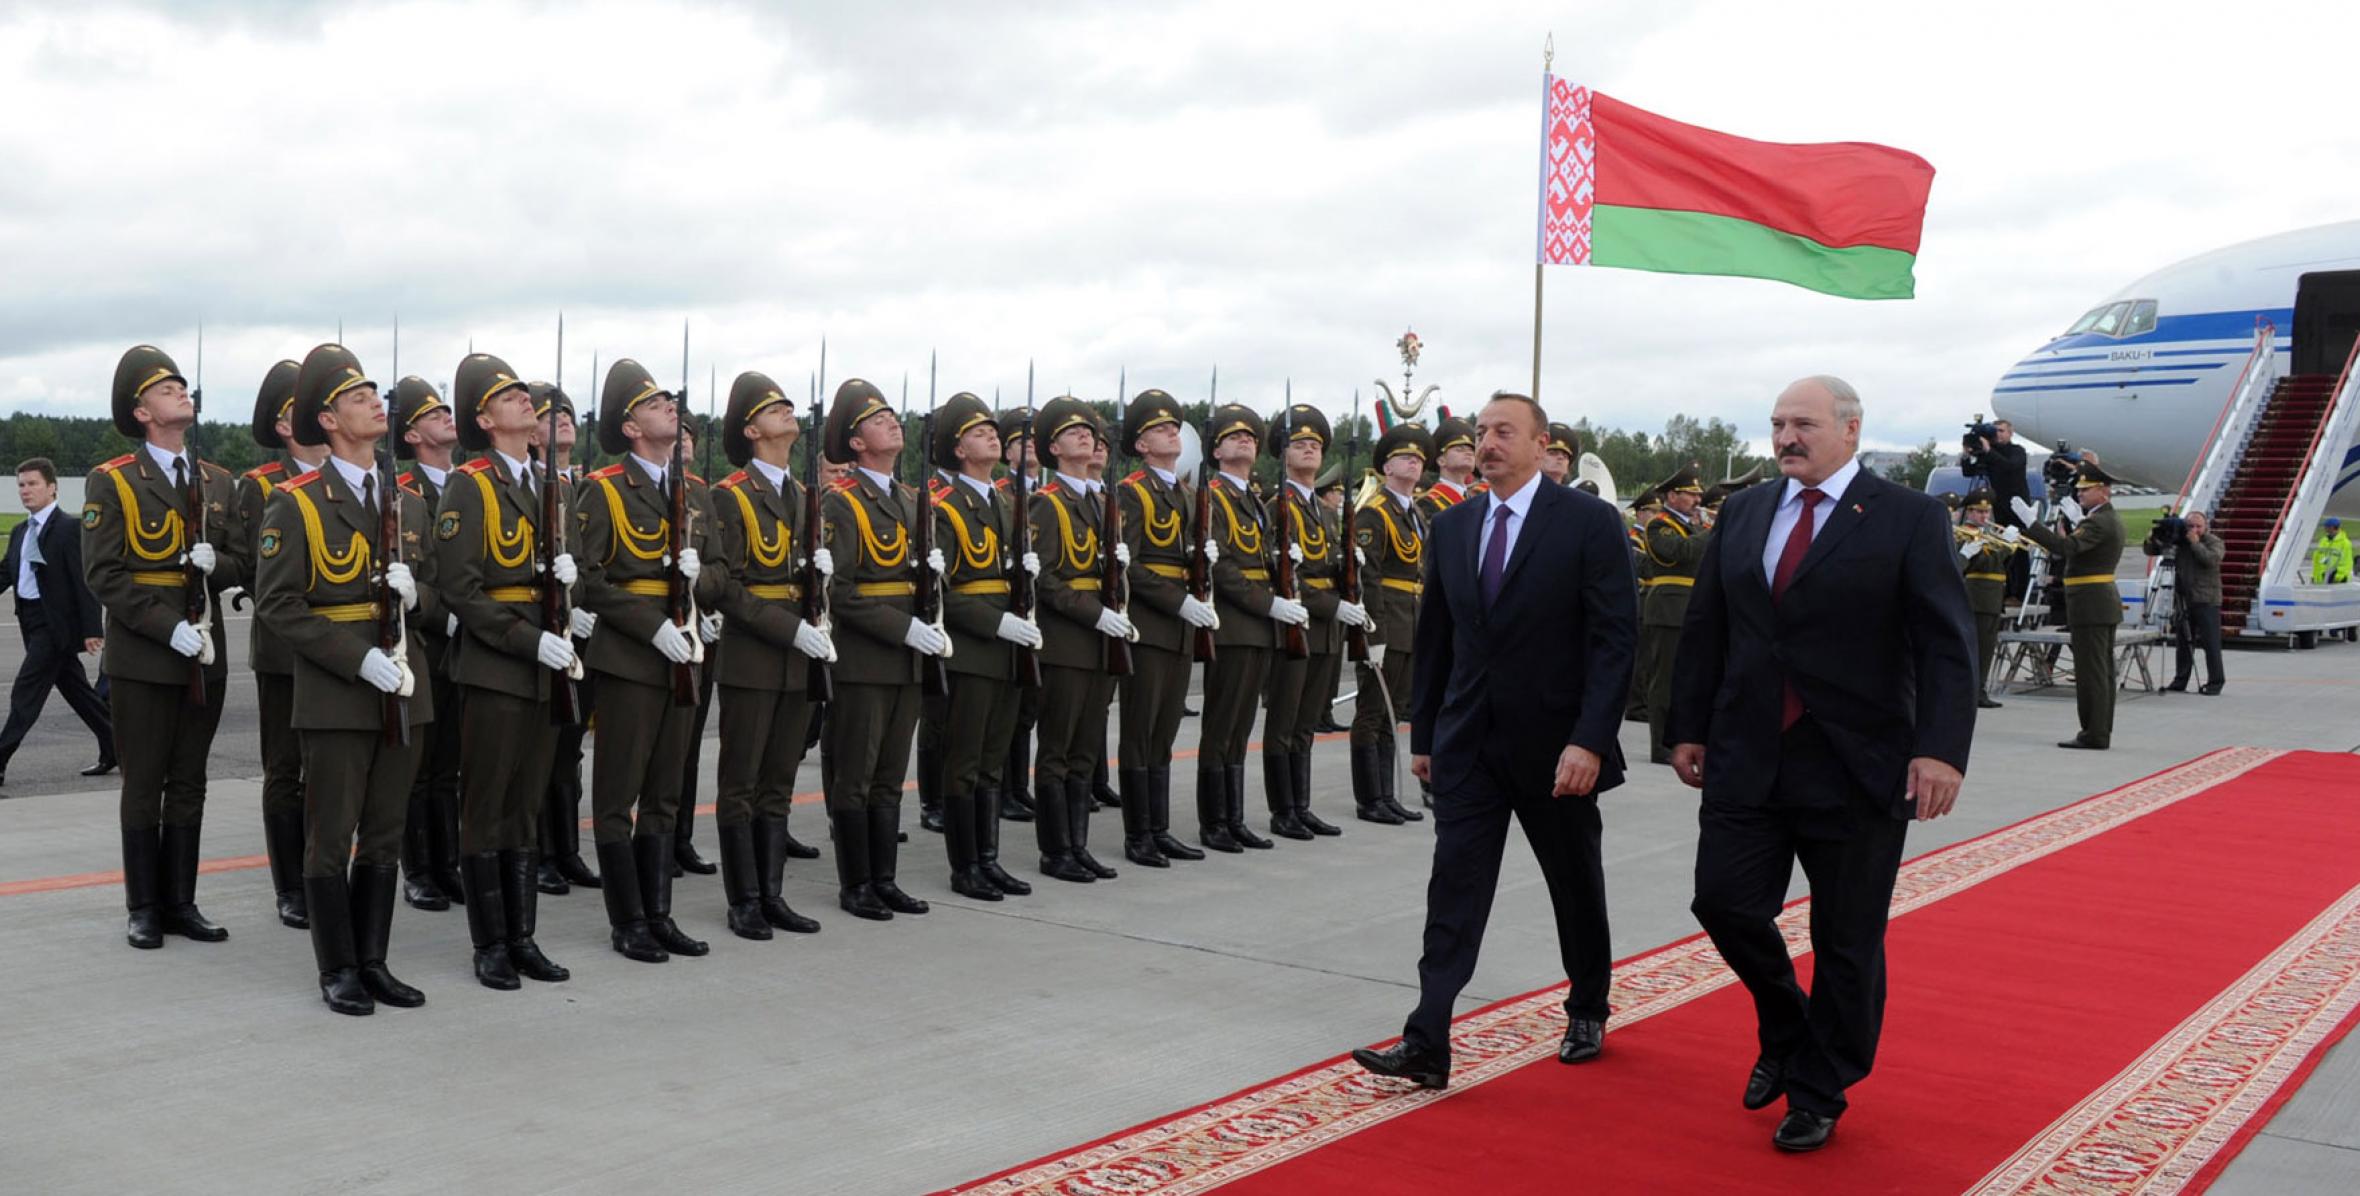 Ilham Aliyev arrived in Belarus on an official visit